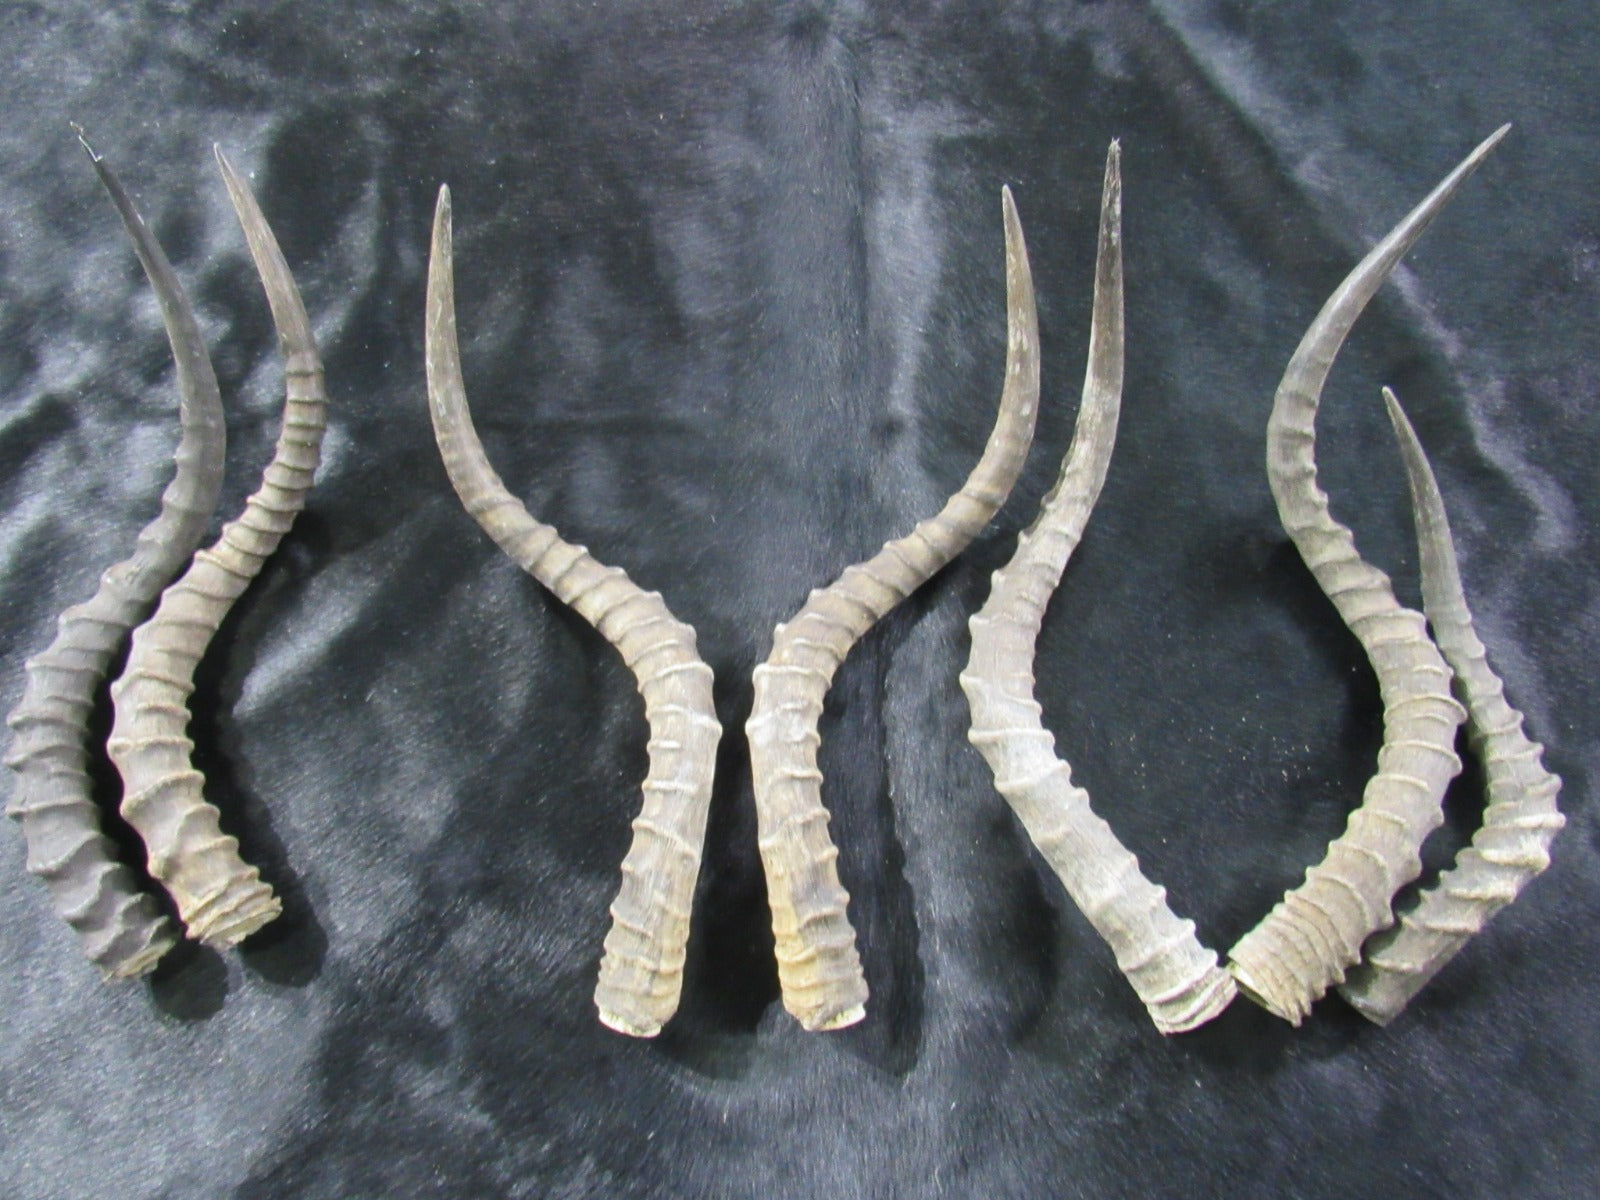 1 Impala Horn, Deer Horn, African Antelope Horn - Average Size Approx. 18" (measured straight)